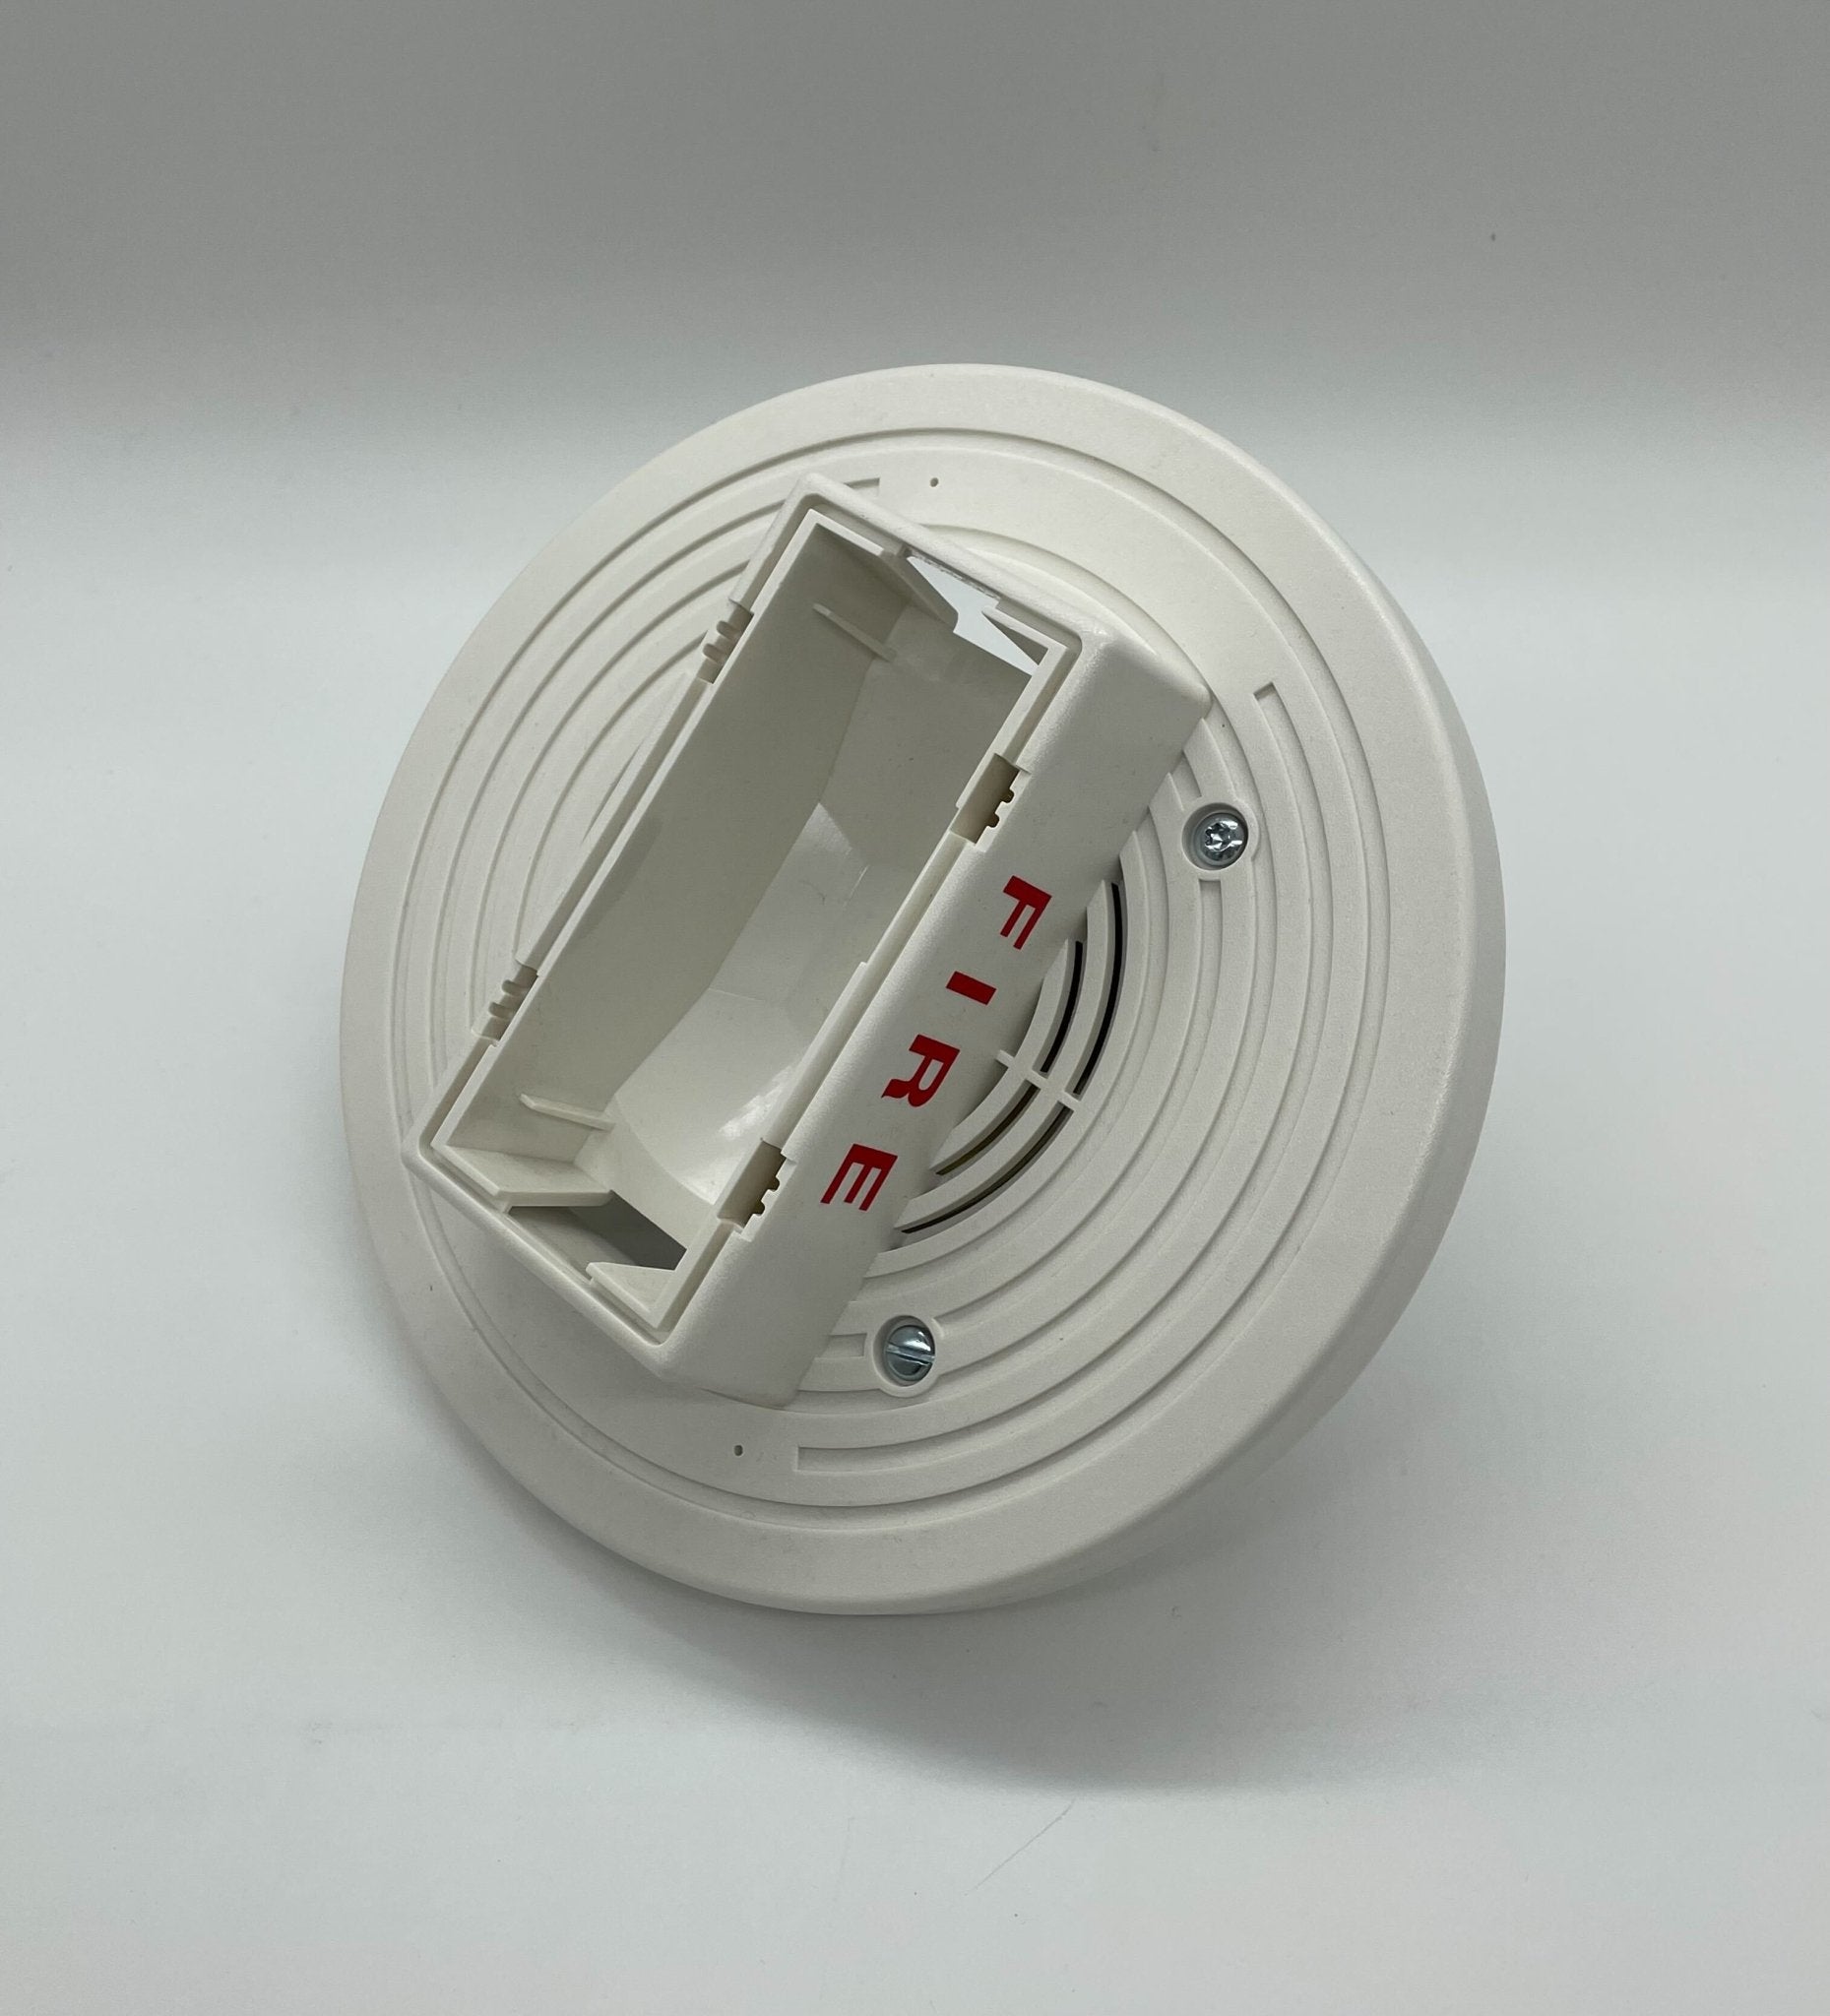 Simplex 4906-9254 Ceiling Mount White Strobe - The Fire Alarm Supplier